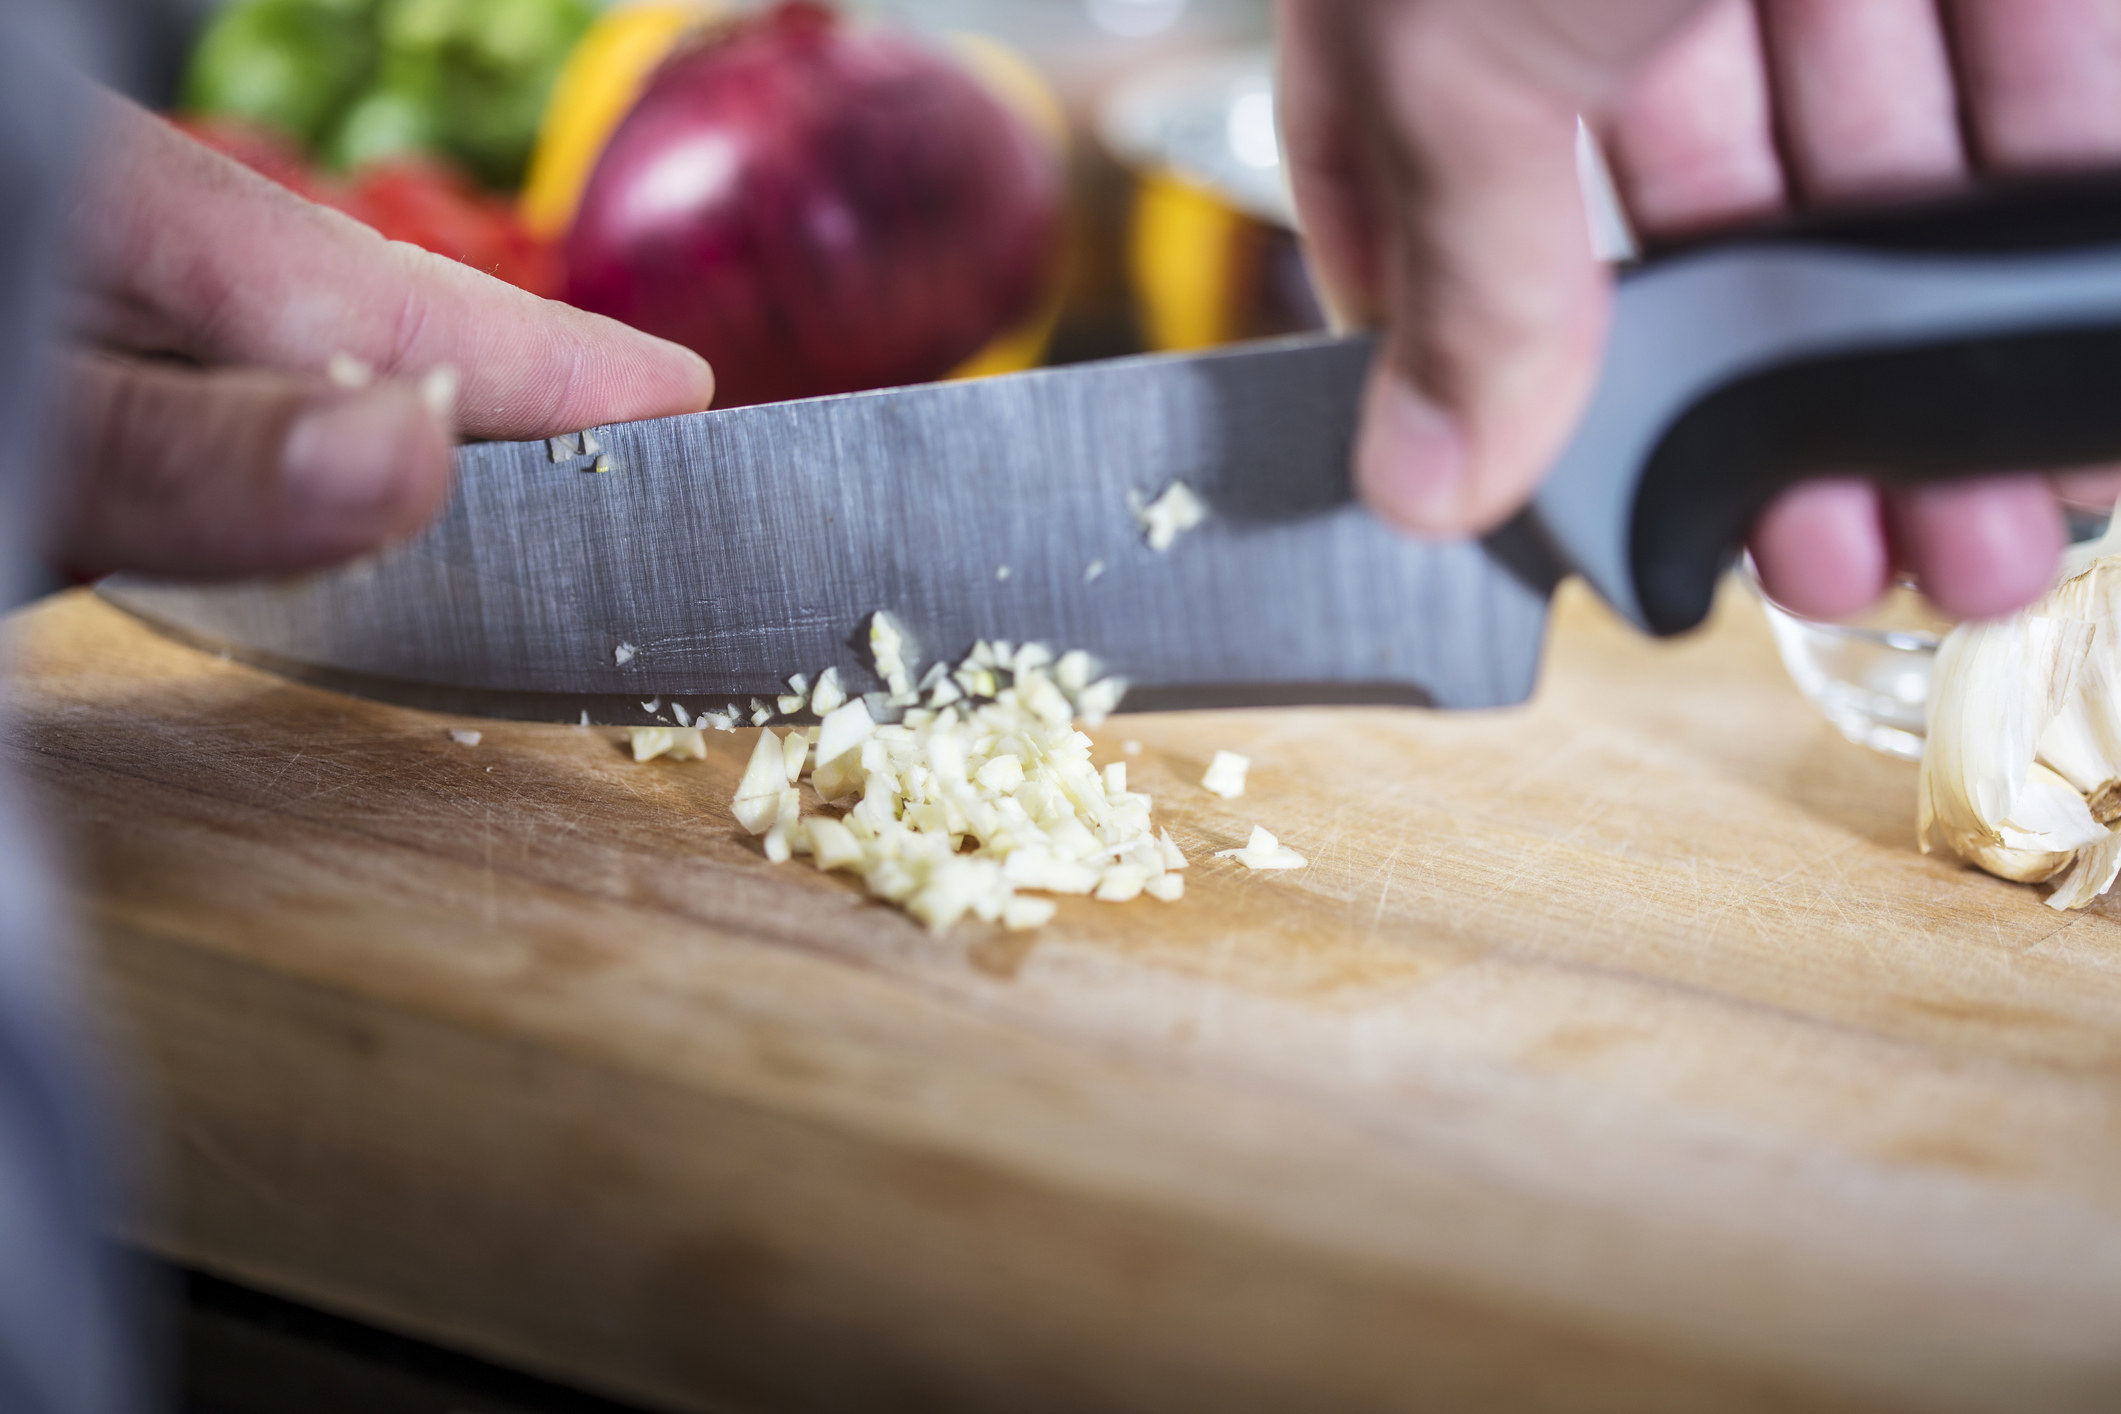 A stock image of hands chopping fresh garlic on a cutting board